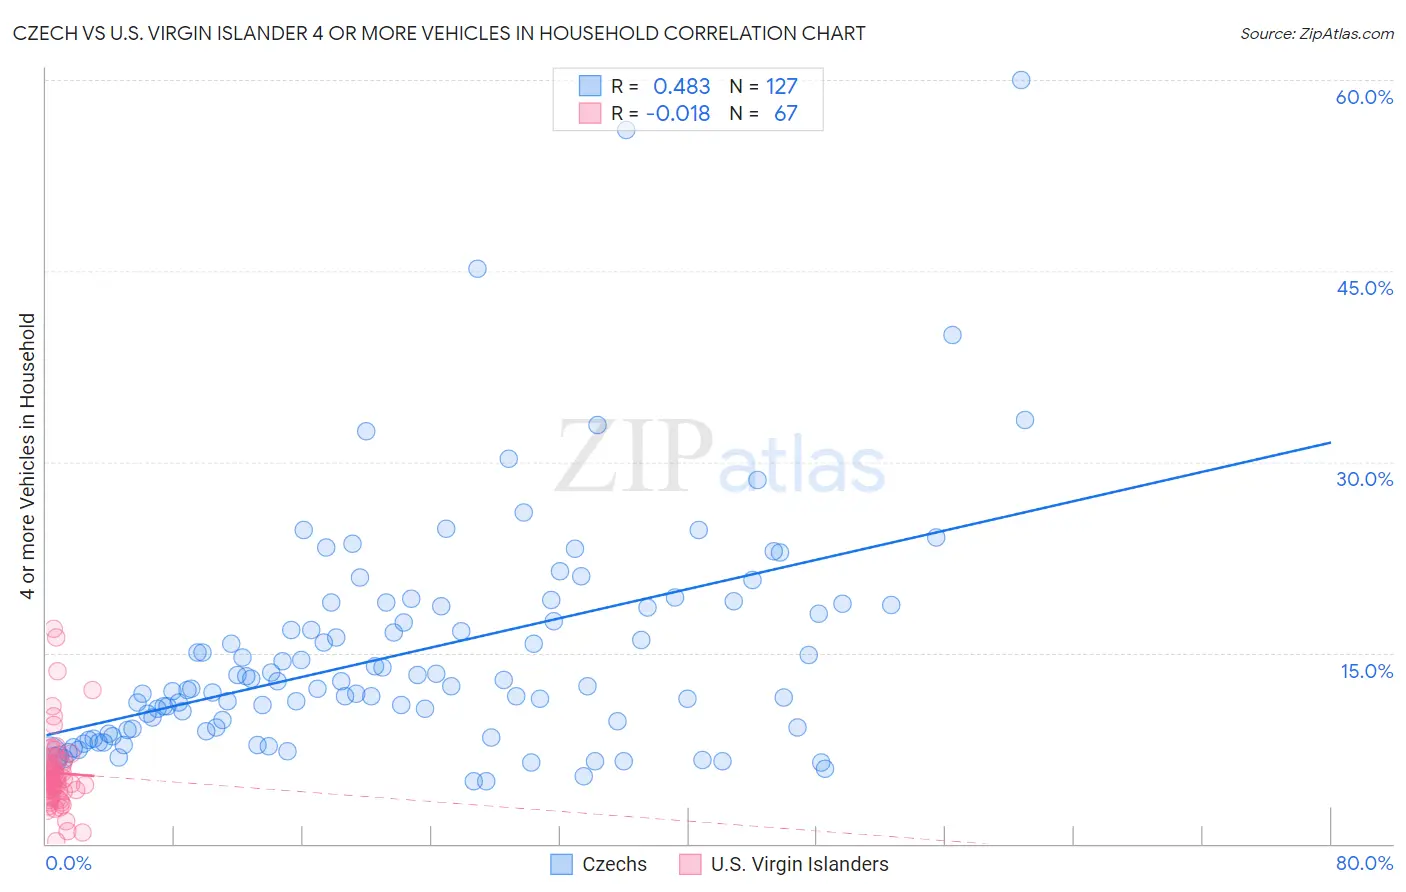 Czech vs U.S. Virgin Islander 4 or more Vehicles in Household